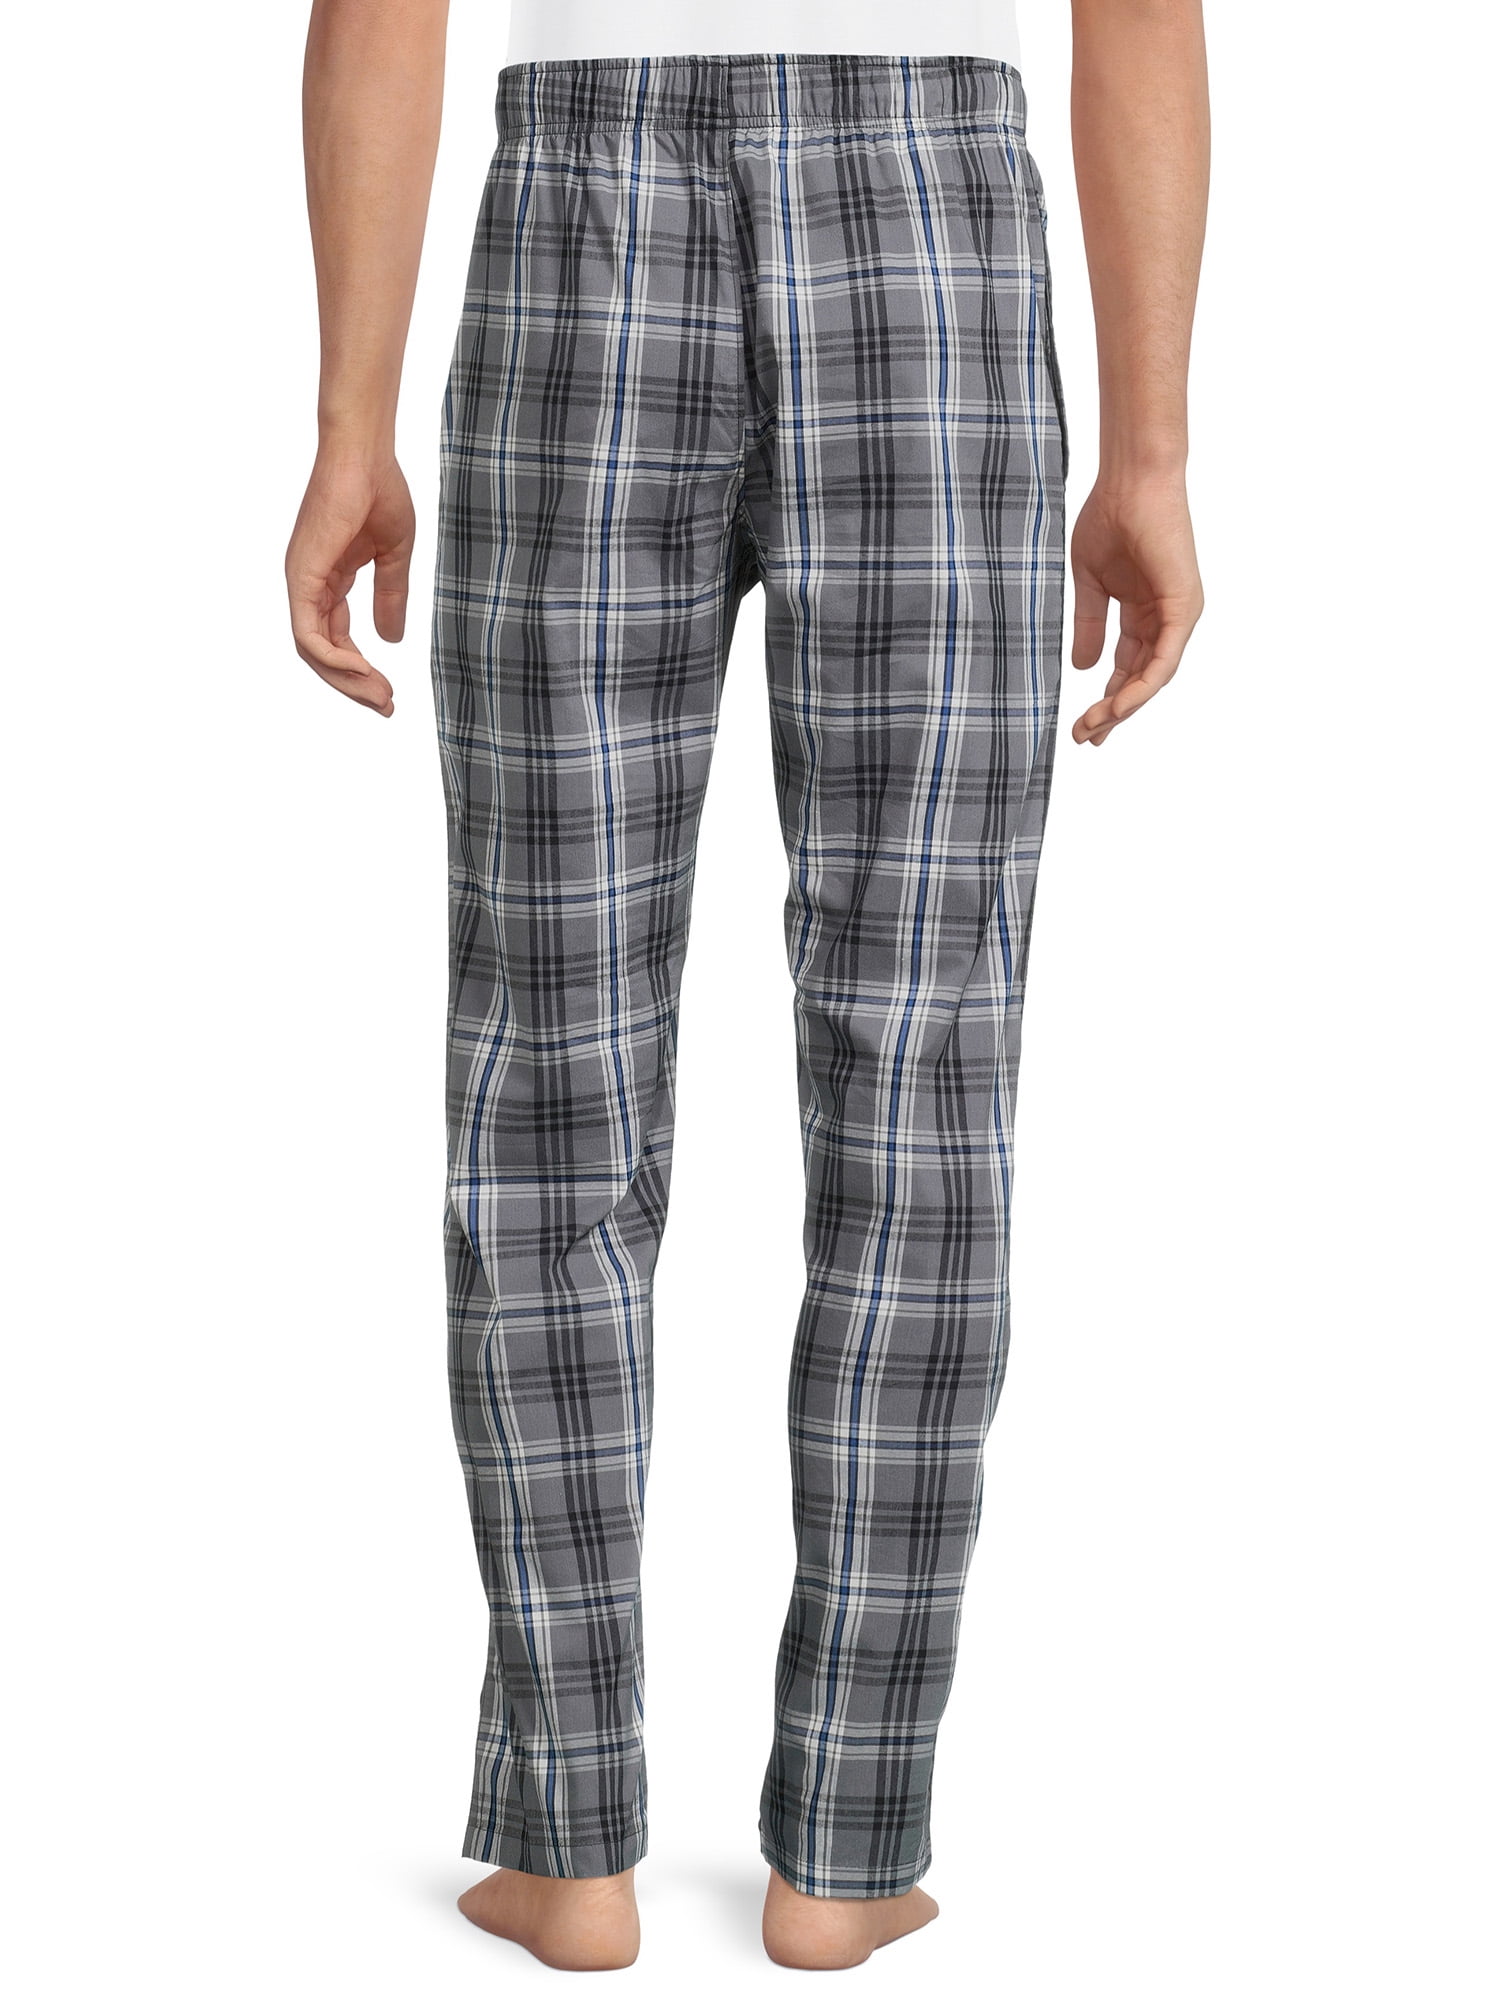 Hanes Men\'s Woven Sleep Pants, Size S-2XL